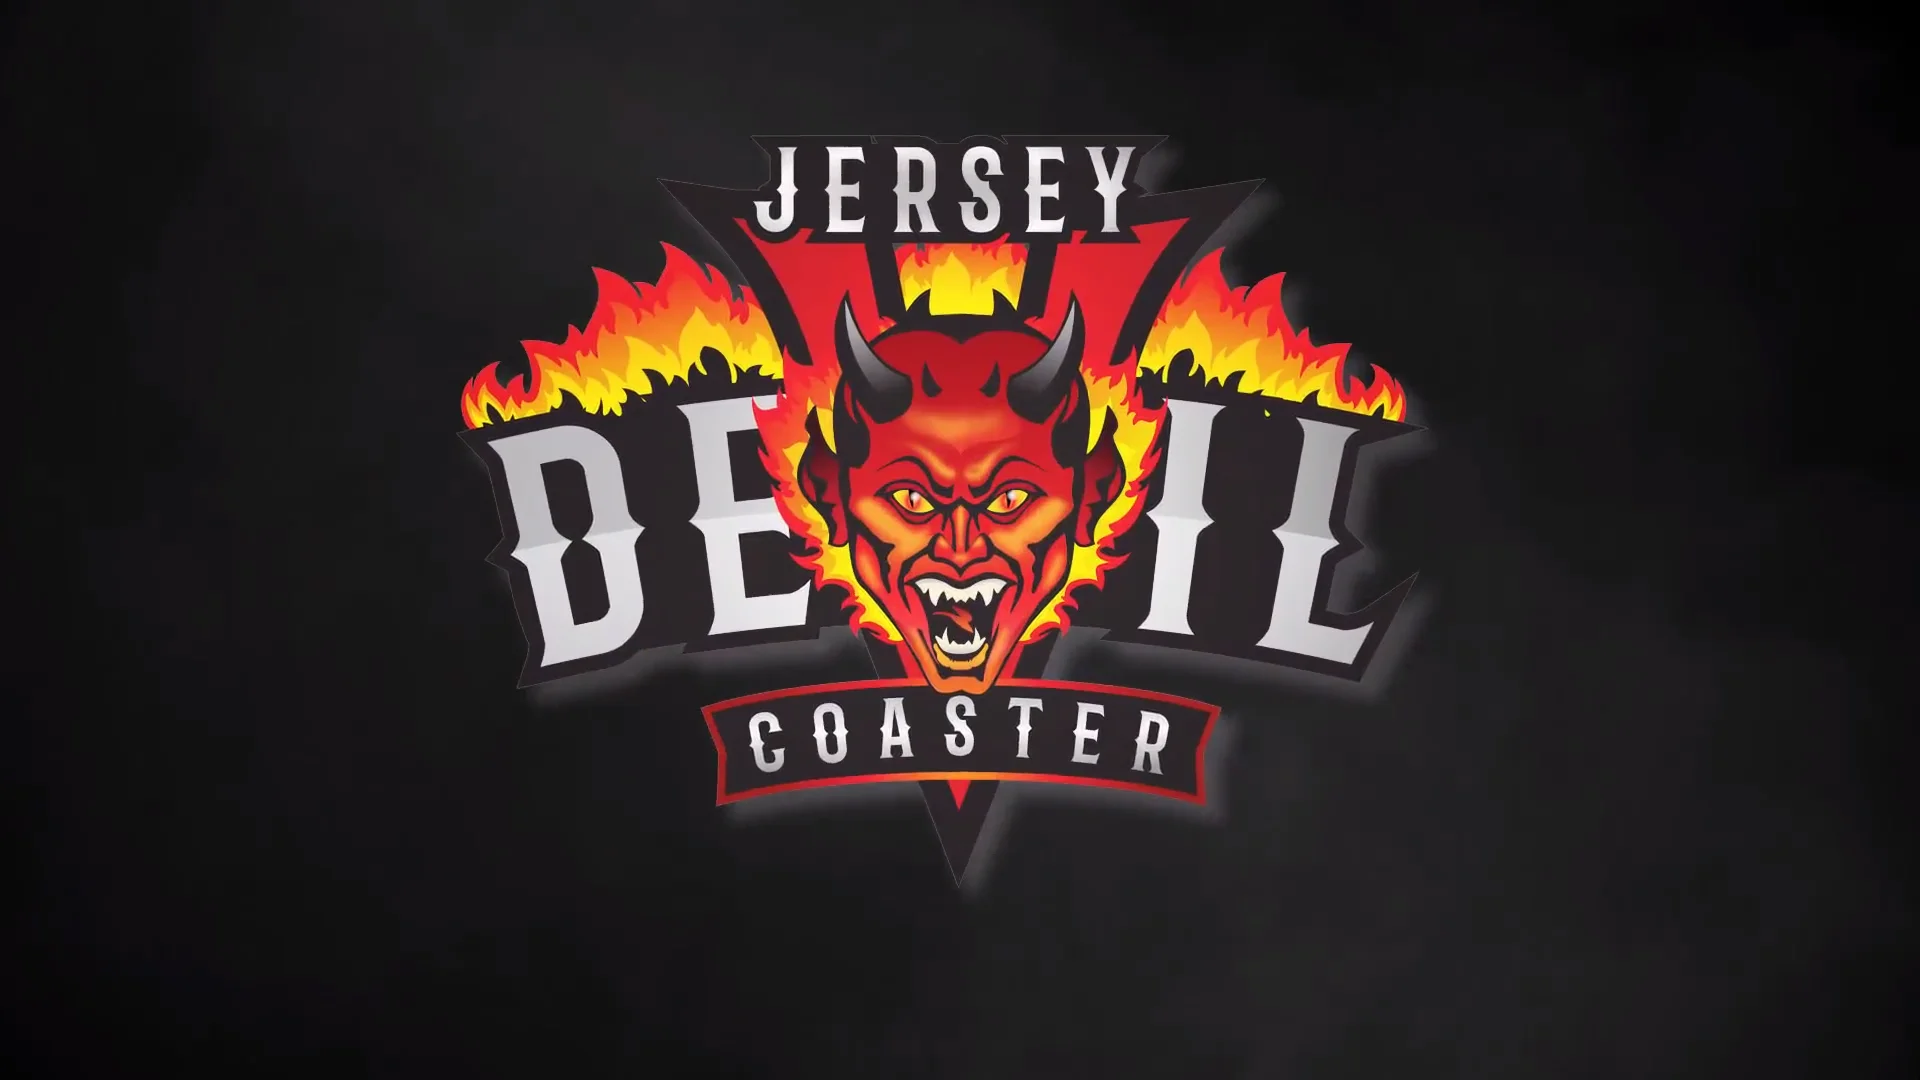 jersey devil website